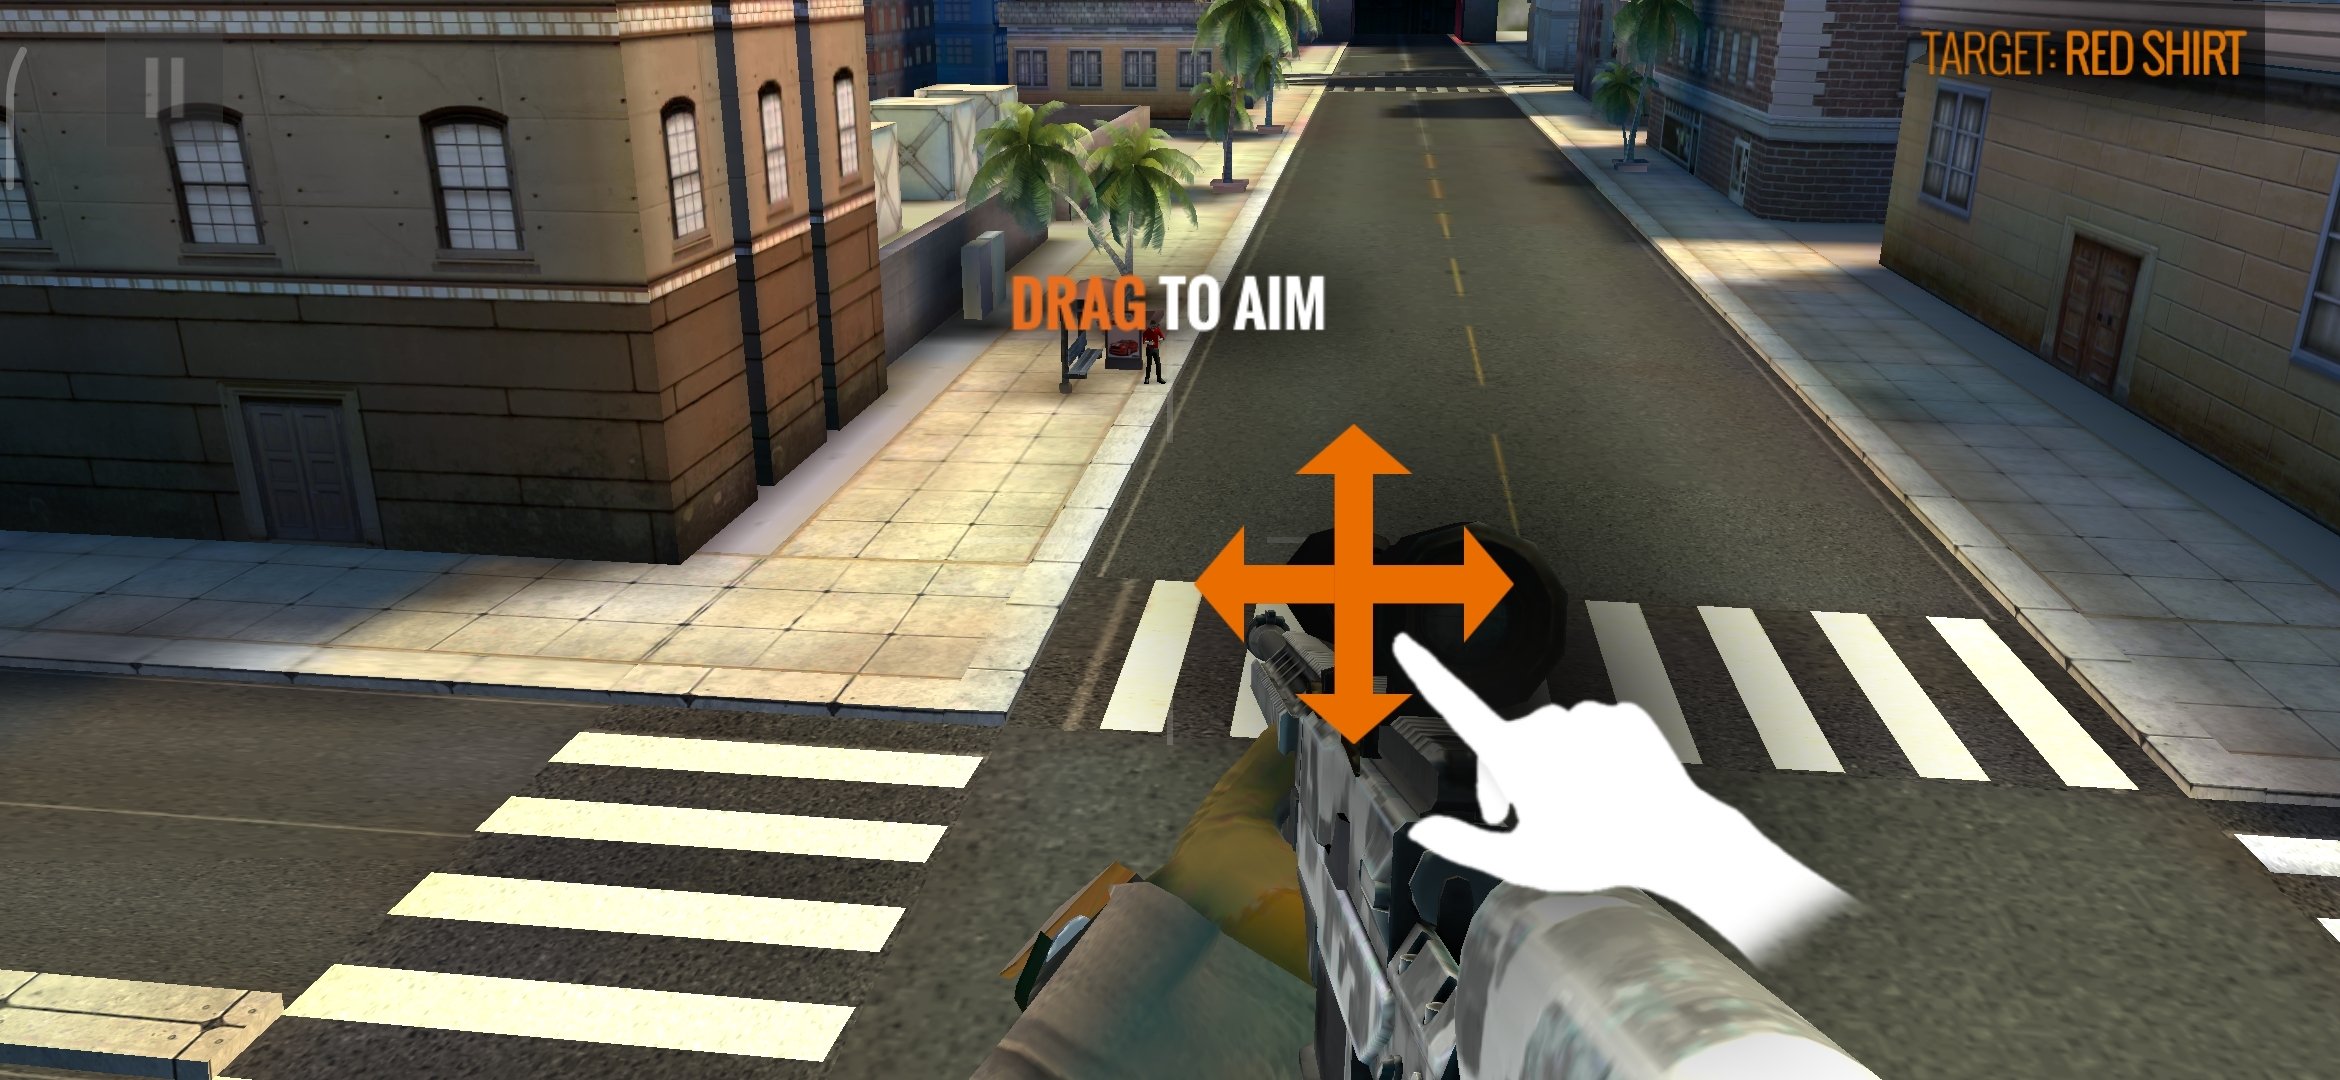 Download Sniper 3D Assassin: Shoot to Kill